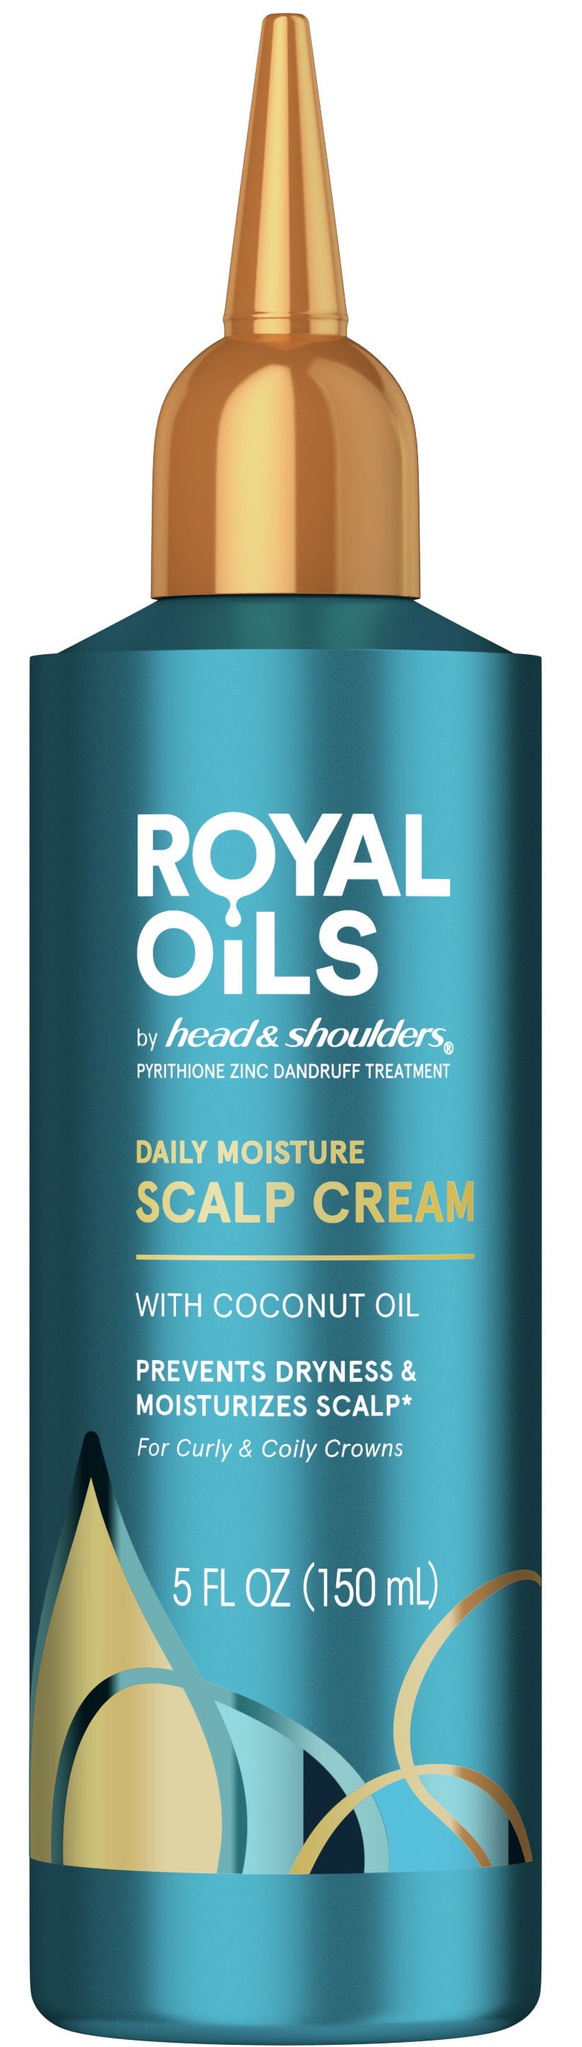 Royal Oils Daily Moisture Scalp Cream